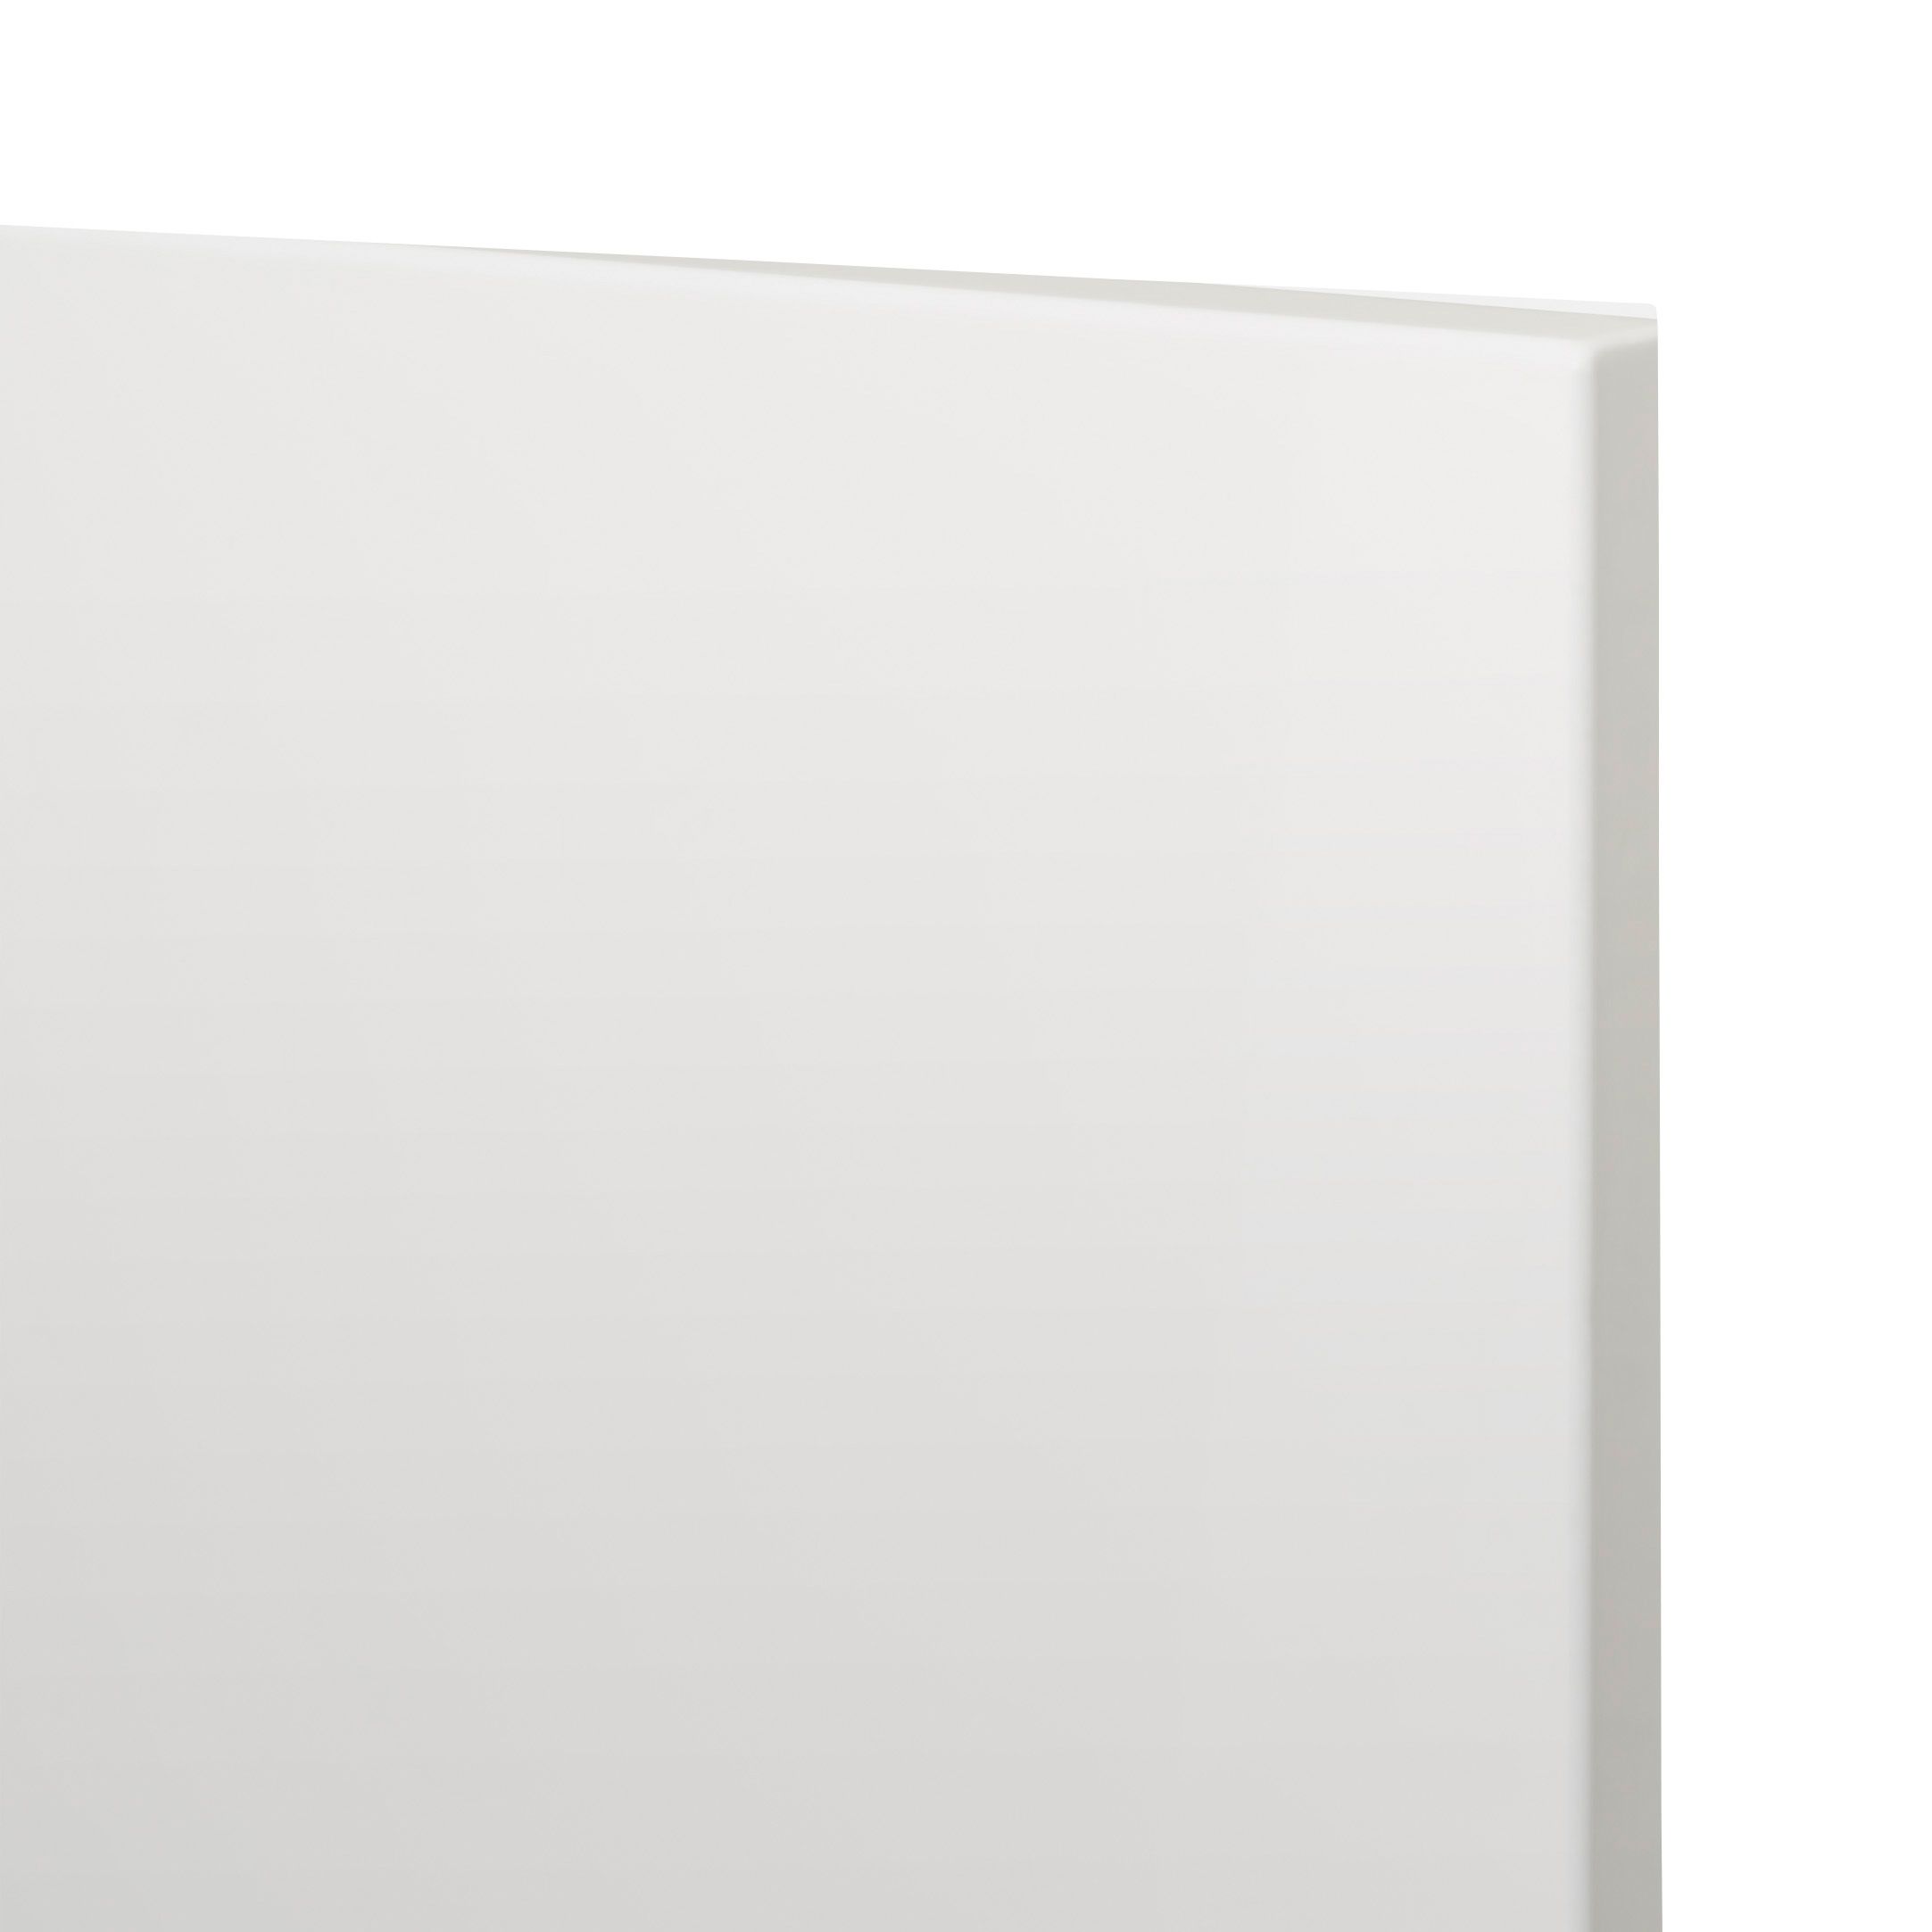 GoodHome Alisma High gloss white slab Drawer front, bridging door & bi fold door, (W)600mm (H)356mm (T)18mm